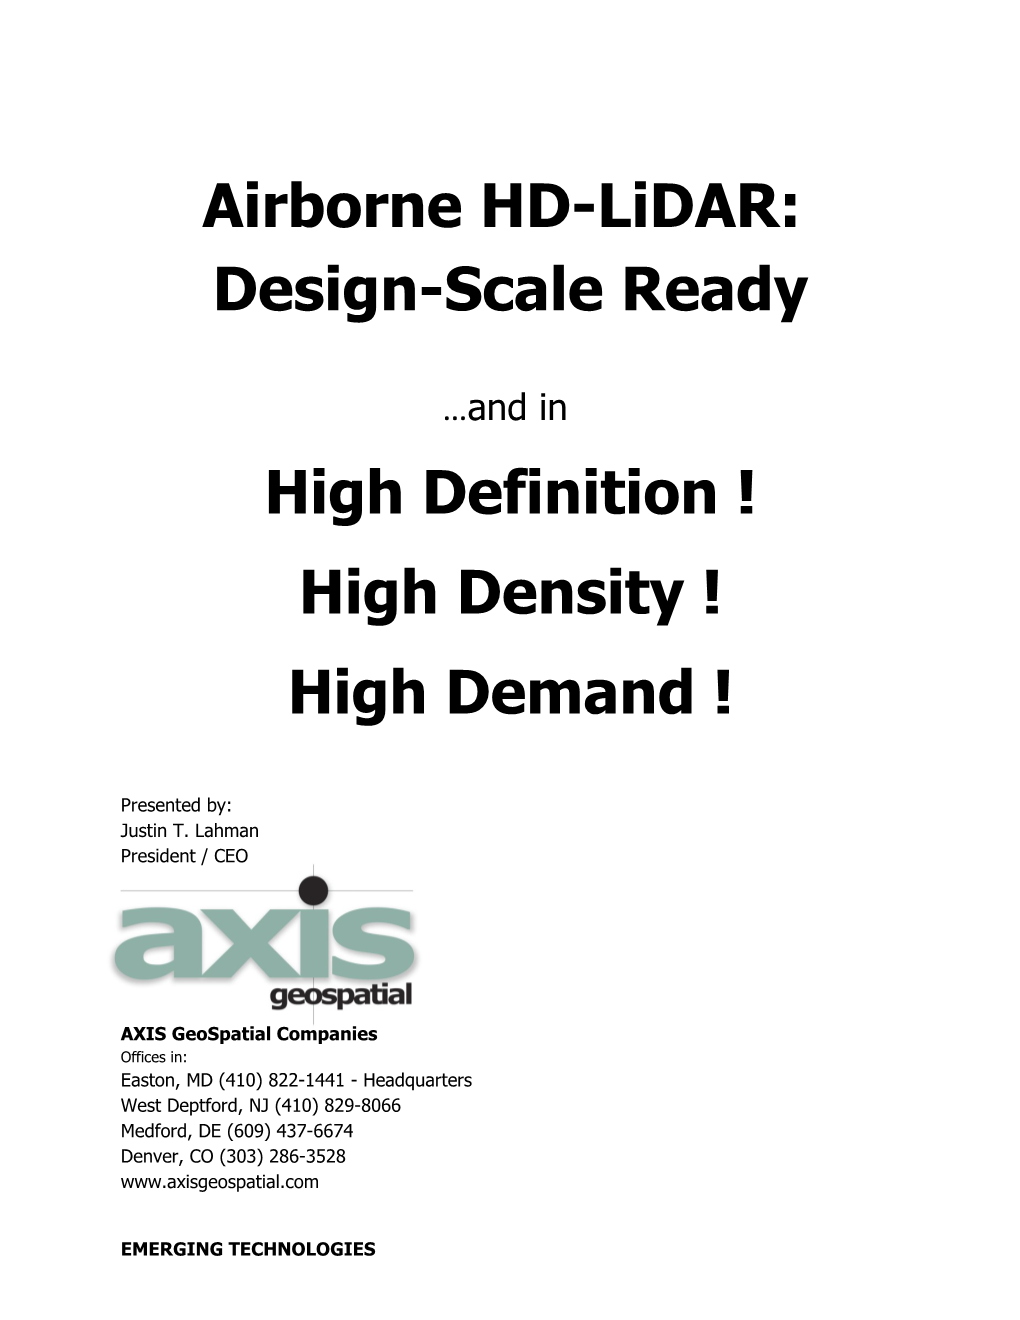 Airborne HD-Lidar: Design-Scale Ready